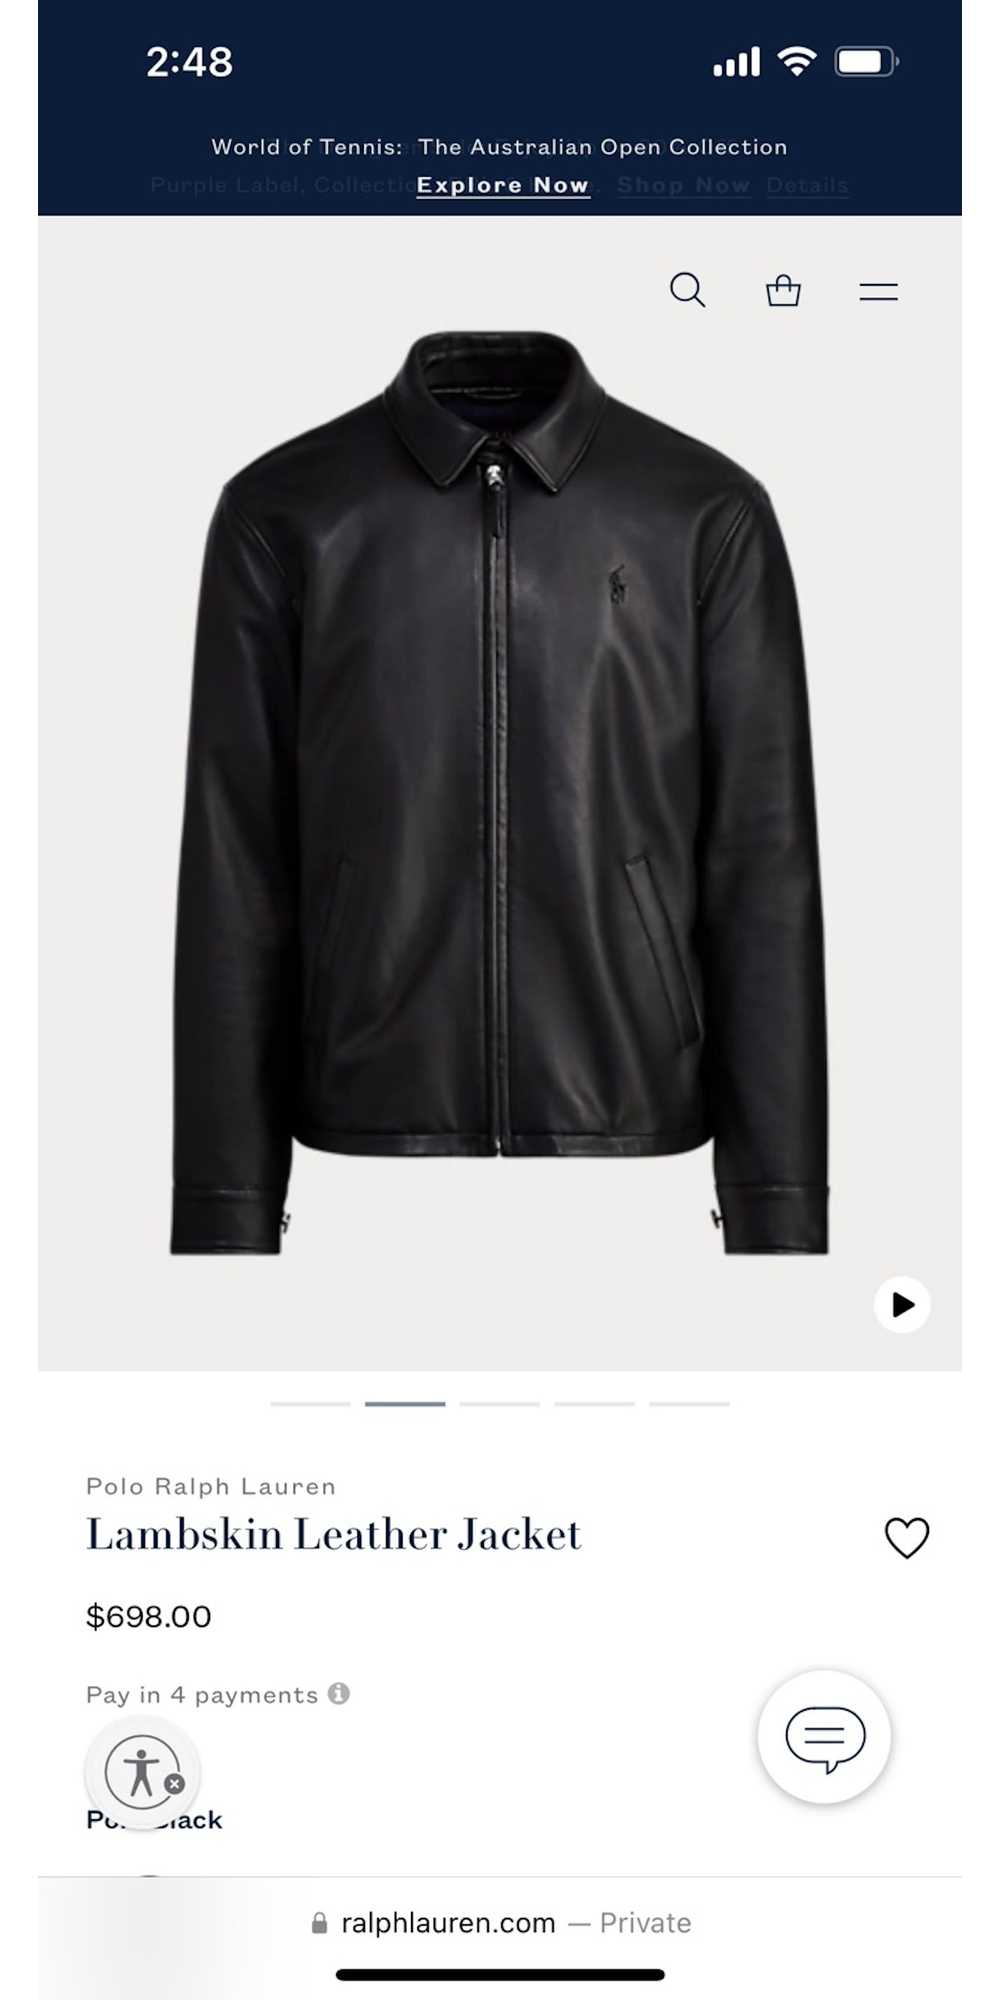 Polo Ralph Lauren Lamb skin Leather Jacket - image 4